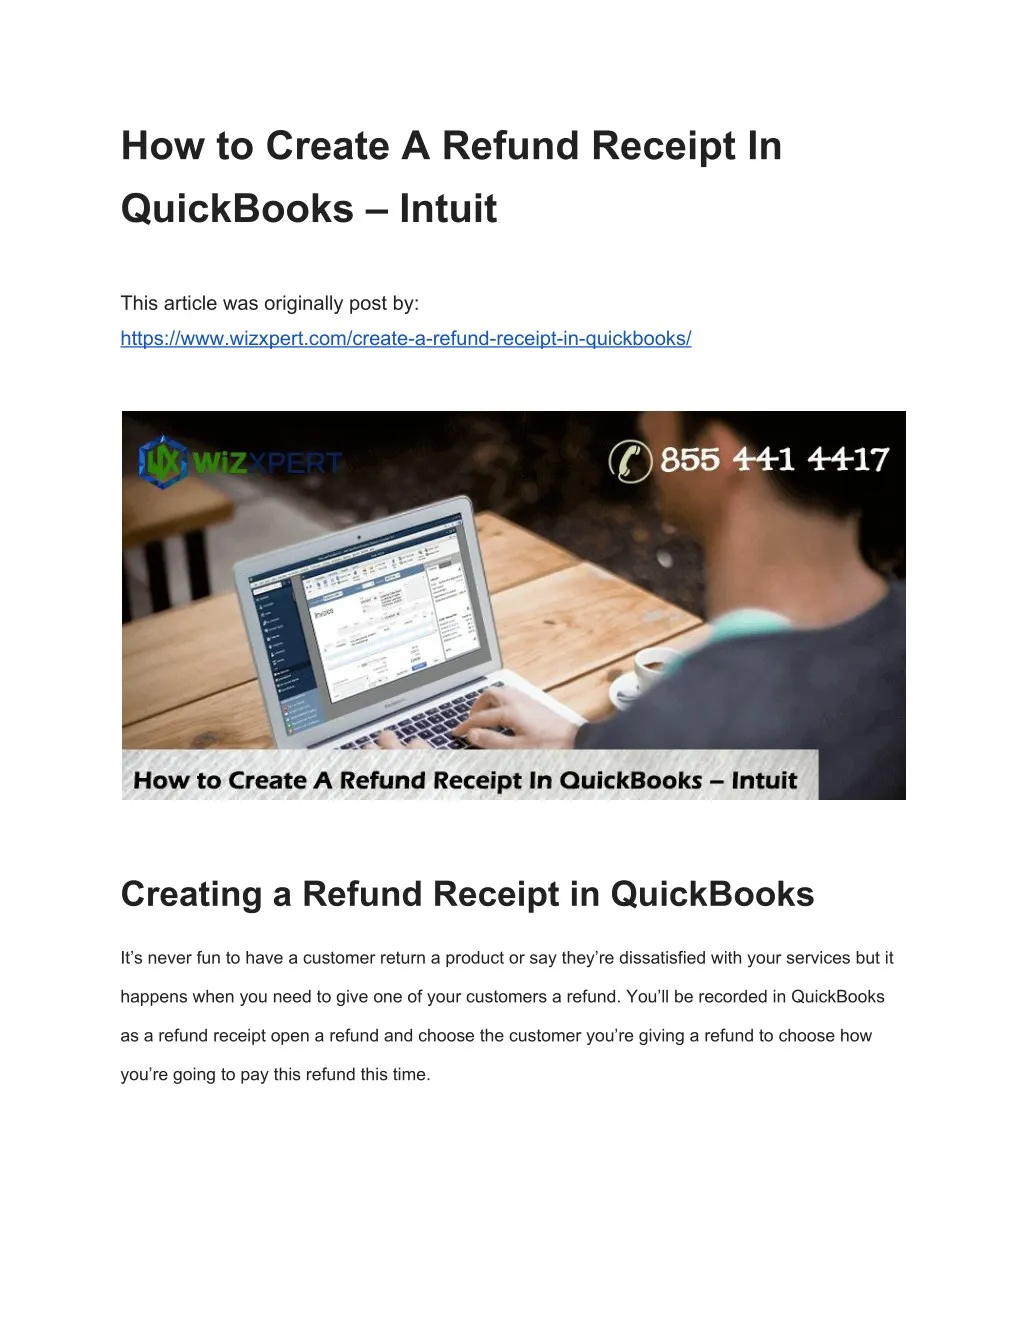 how to create a refund receipt in quickbooks